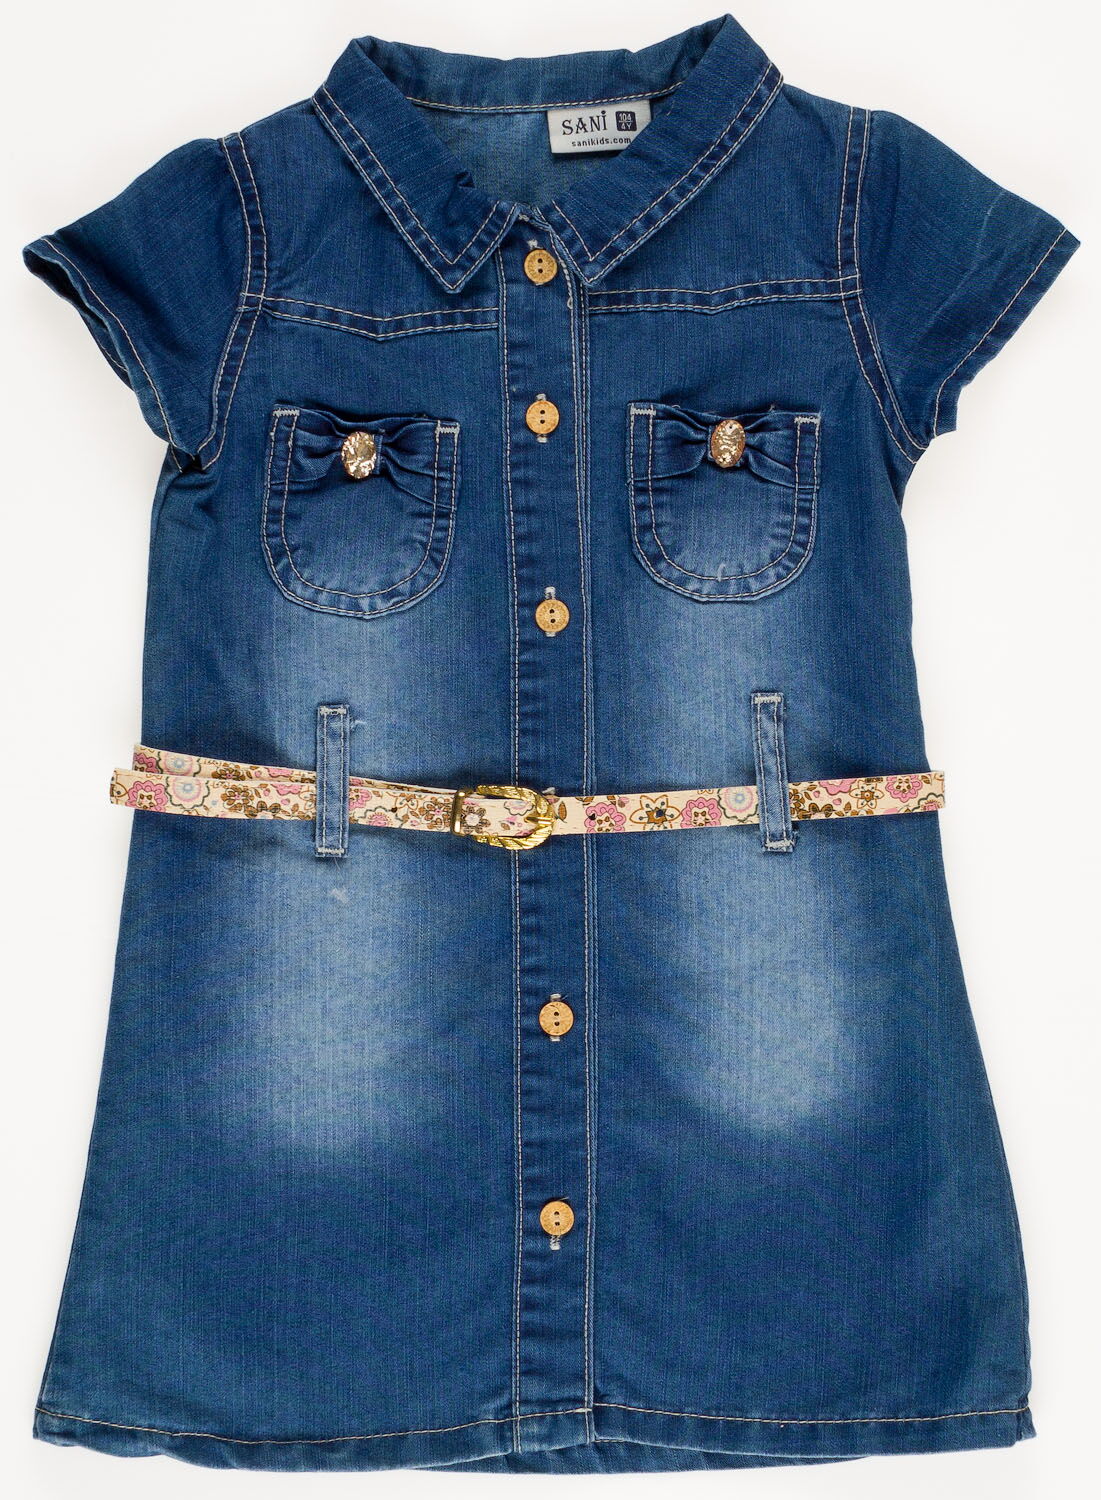 Платье-сафари джинсовое для девочки SANI синее - цена